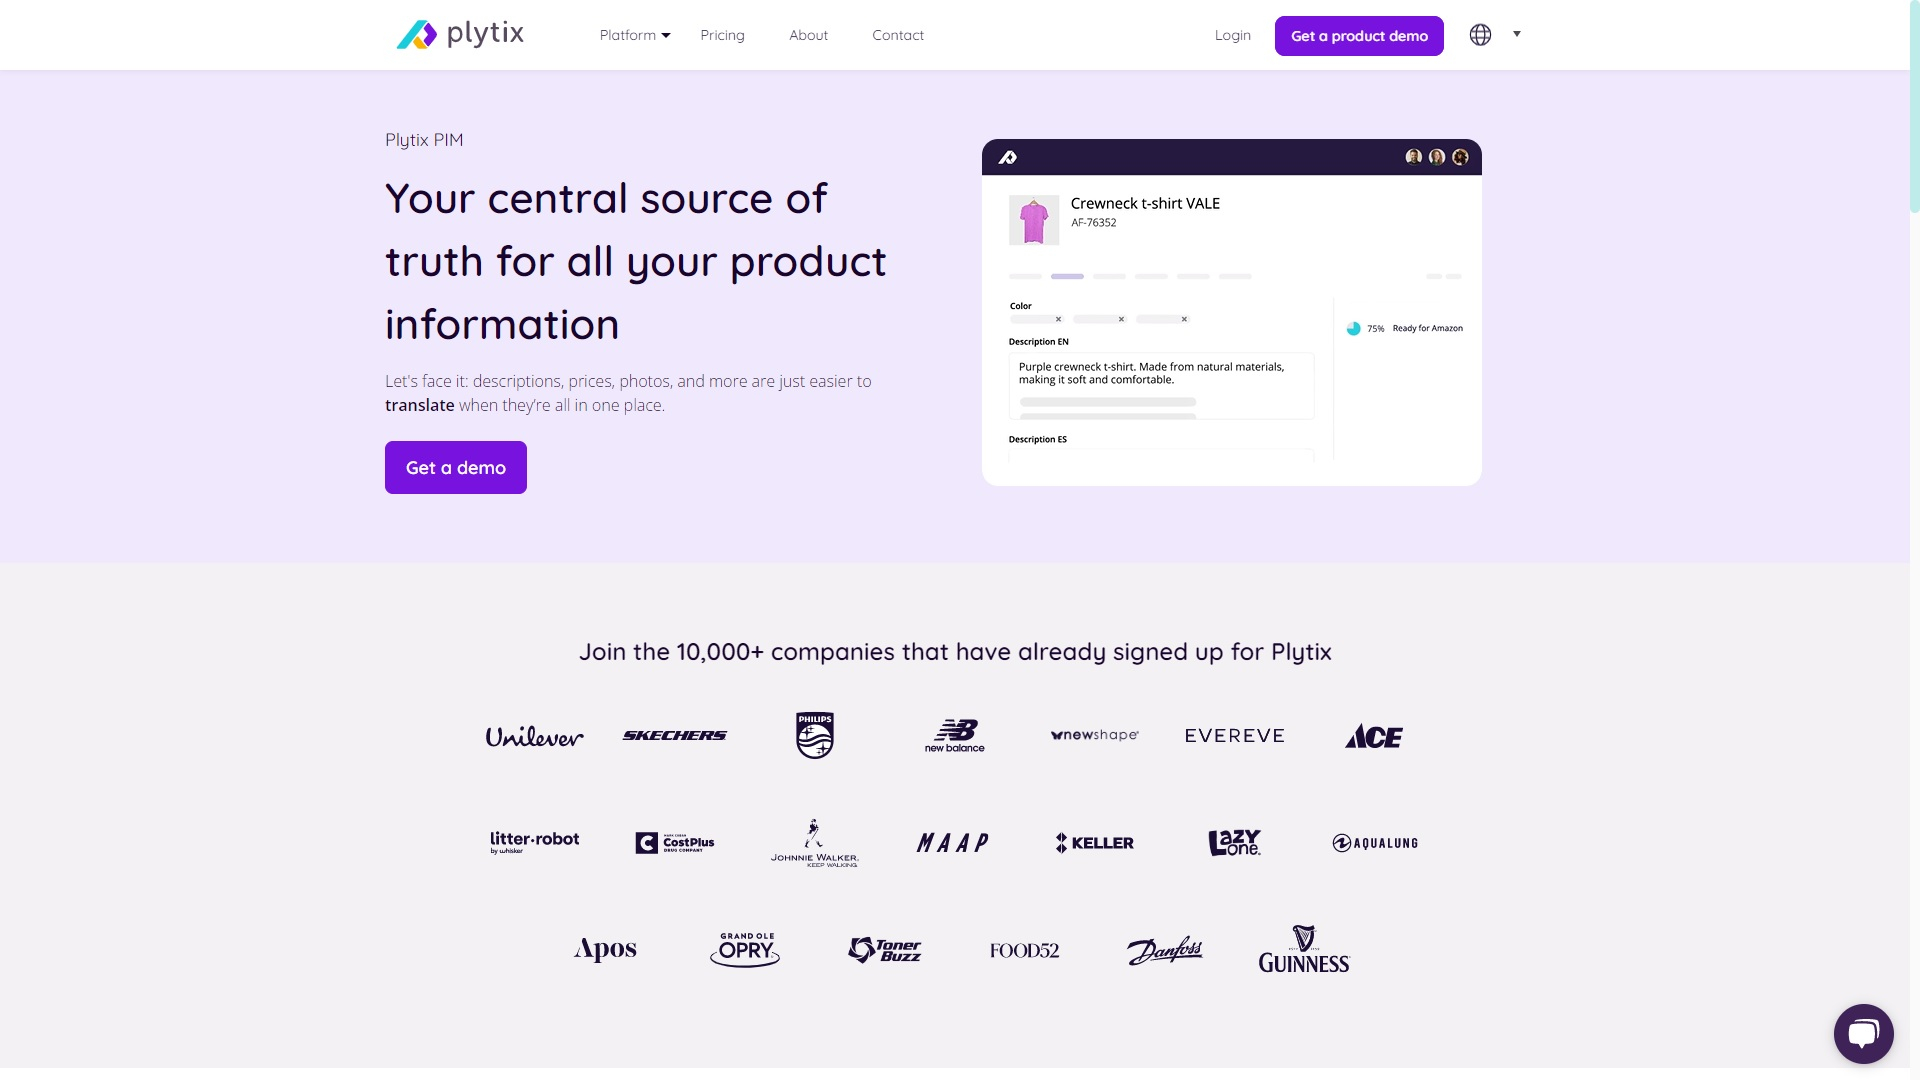 The Plytix homepage.